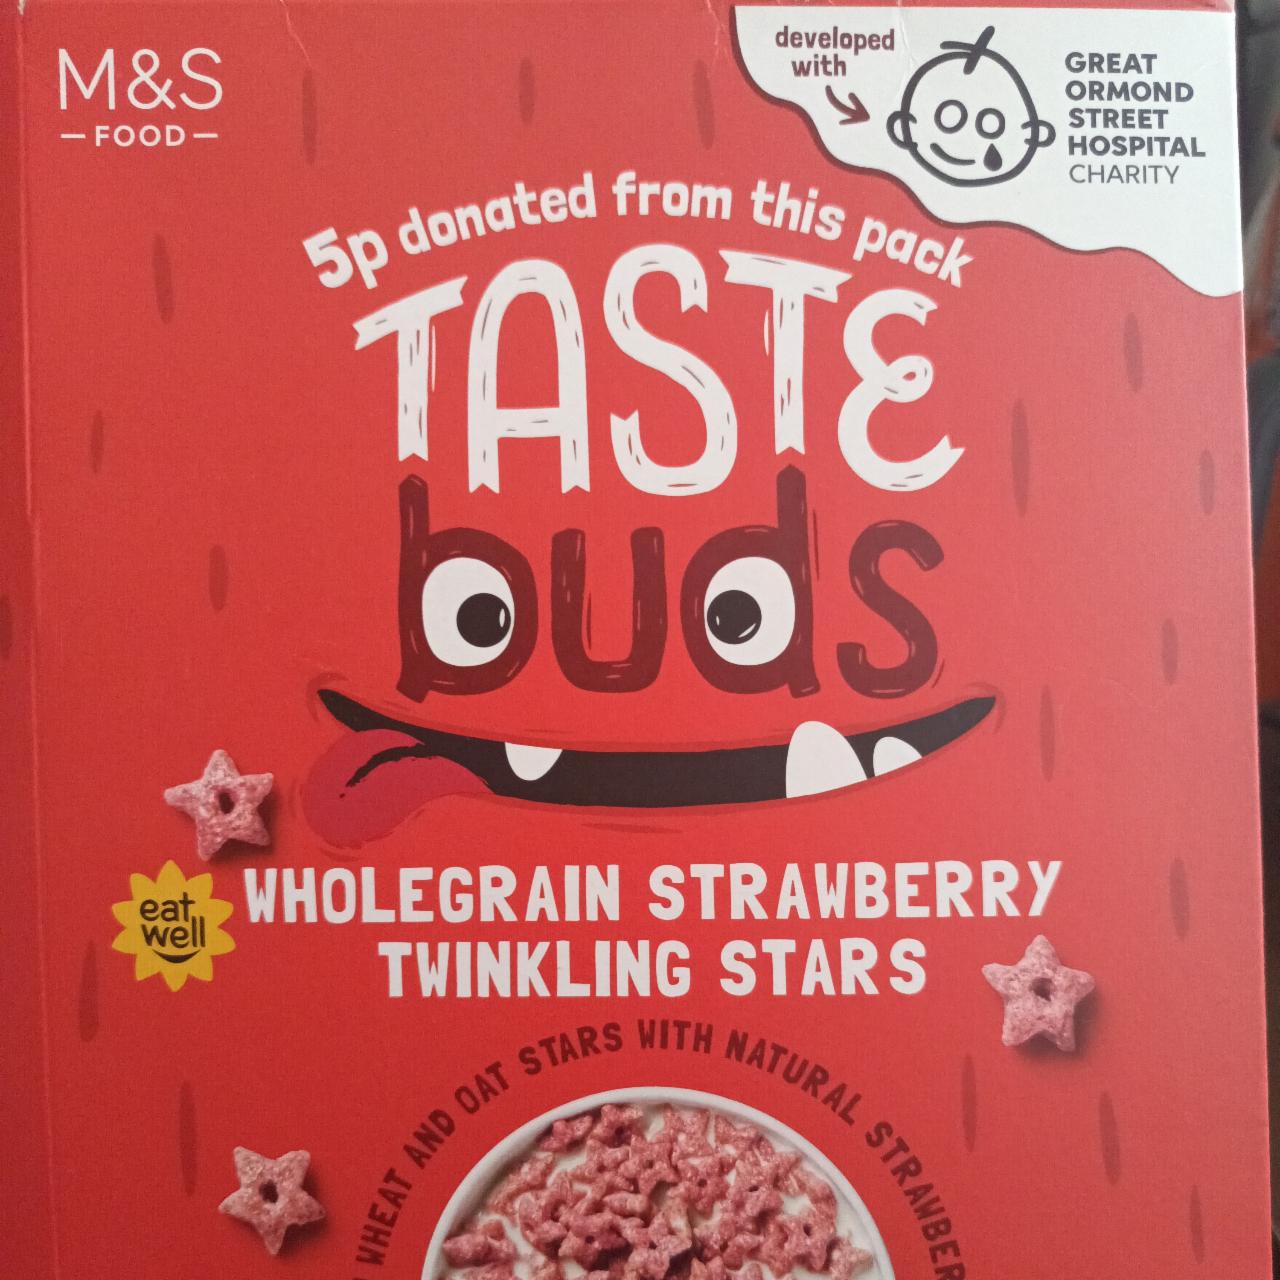 Fotografie - Taste buds Wholegrain strawberry twinkling stars M&S Food